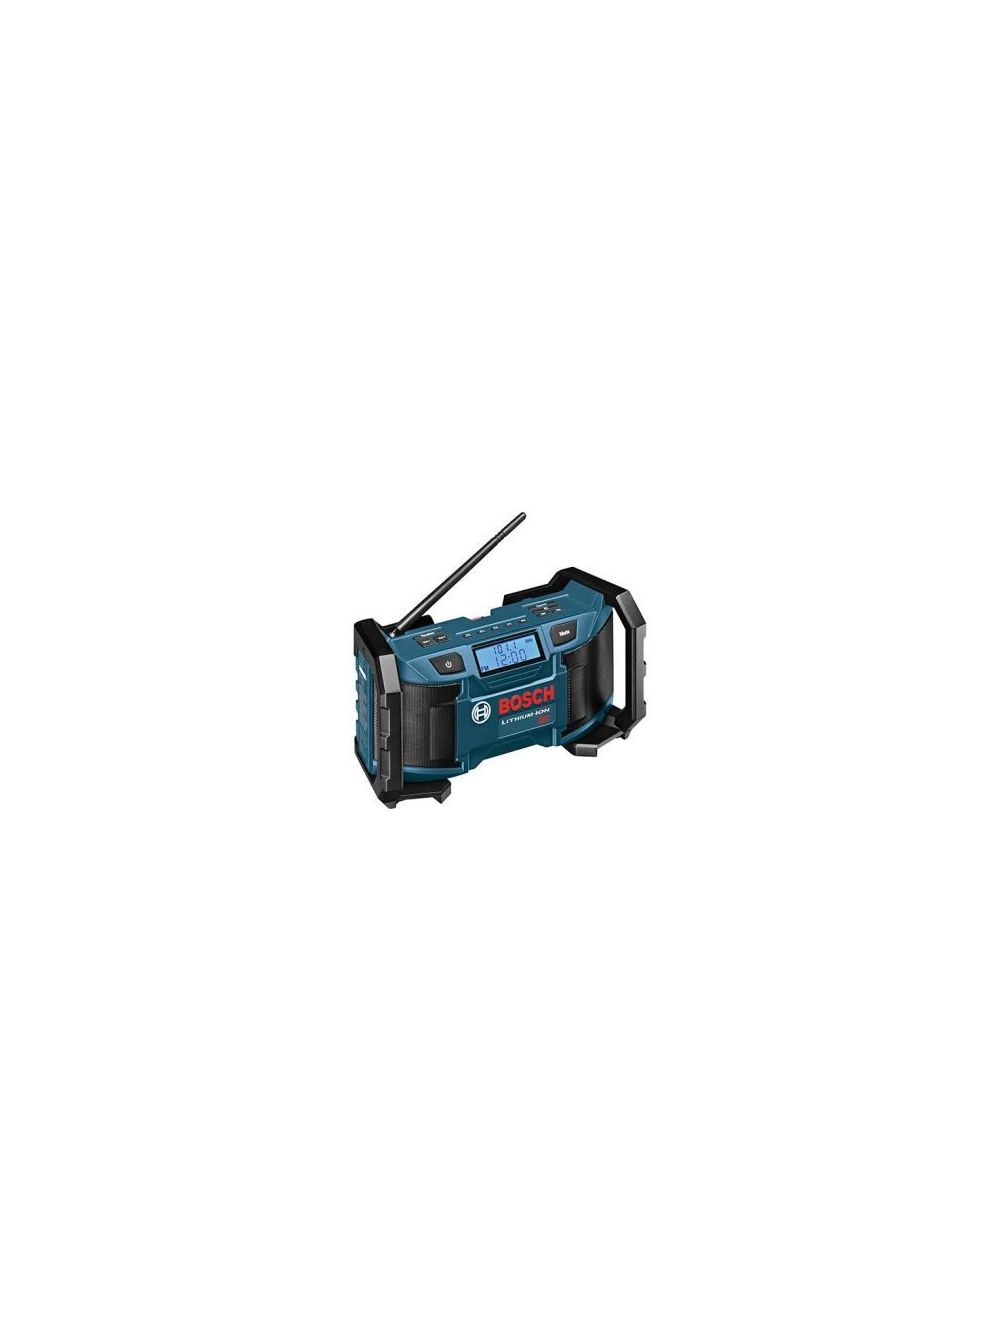 Bosch 18v Compact Radio (PB180) 